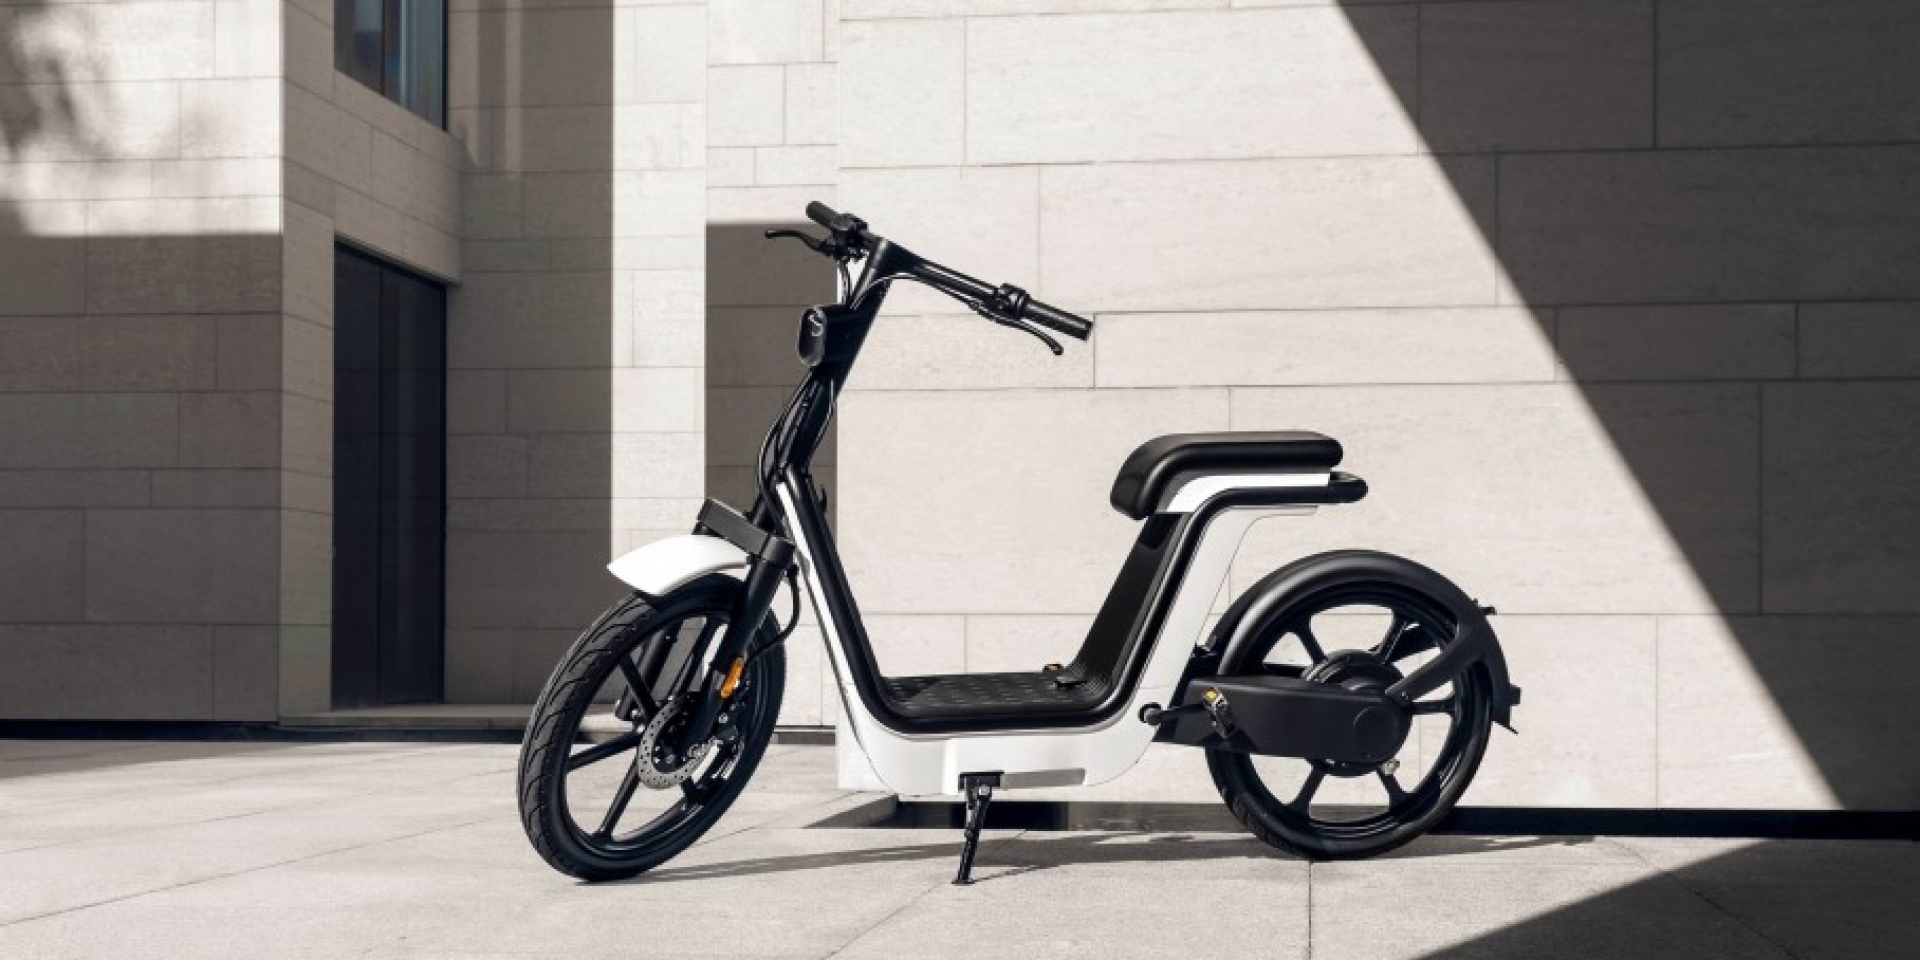 MUJI無印良品 x Honda聯手打造電動自行車  簡約時尚外型首發限量5000台